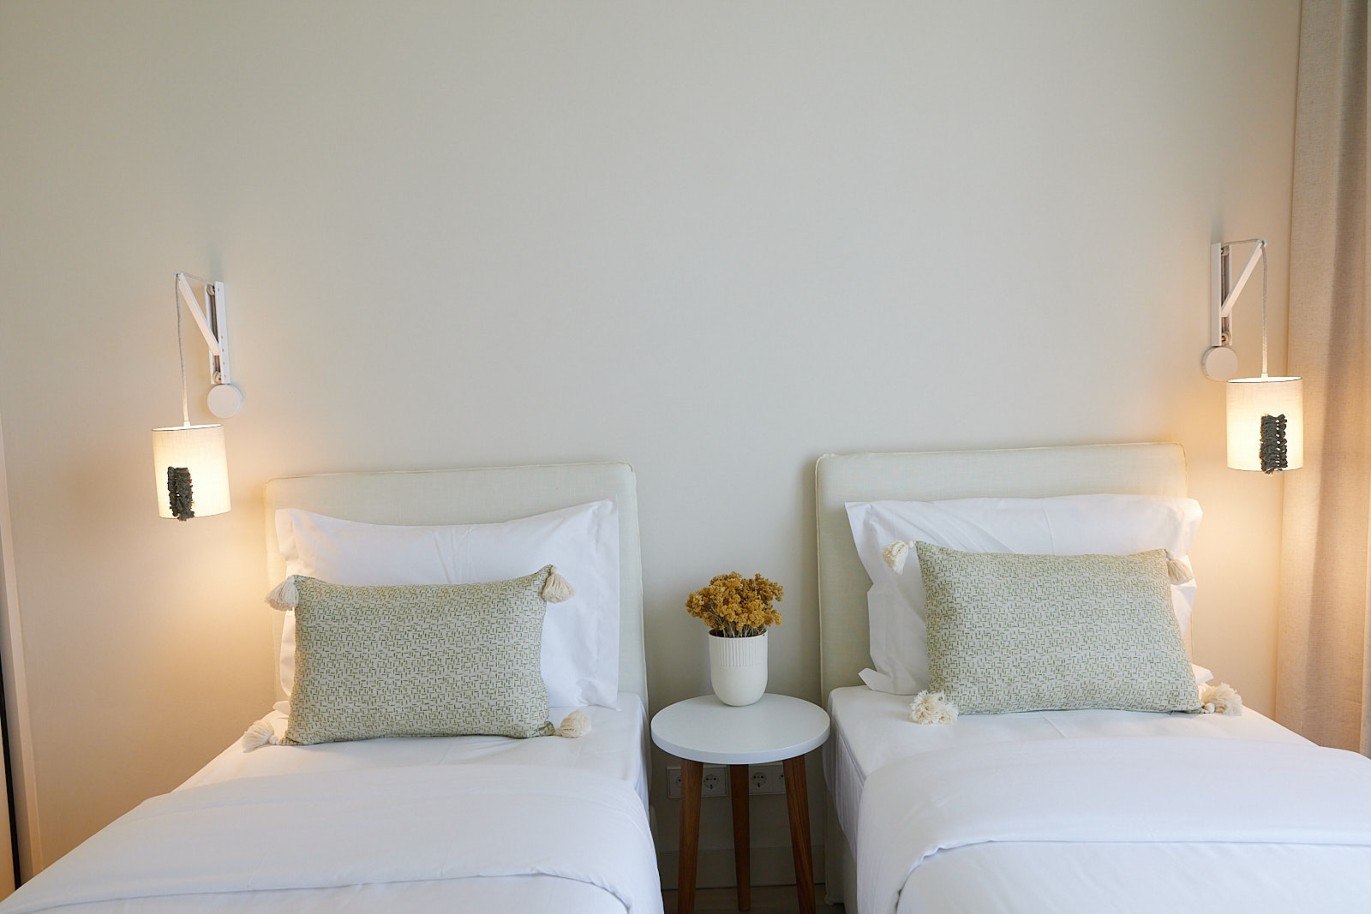 2 bedroom apartment in resort, for sale in Porches, Algarve_229122